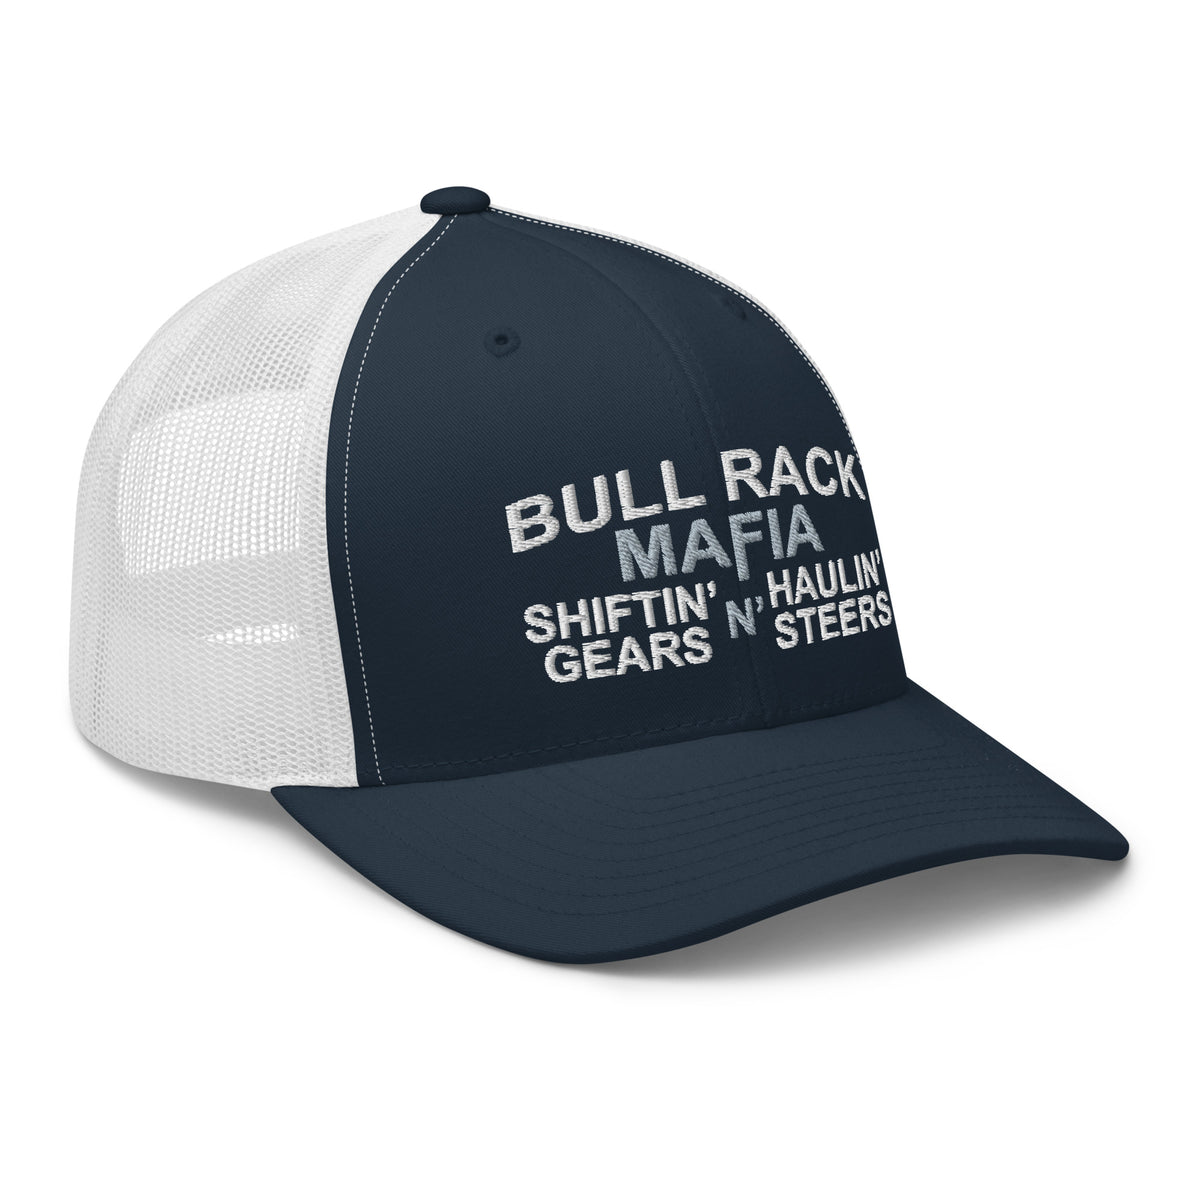 Bull Rack Mafia - Haulin' Steers - Embroidered Hat - Free Shipping